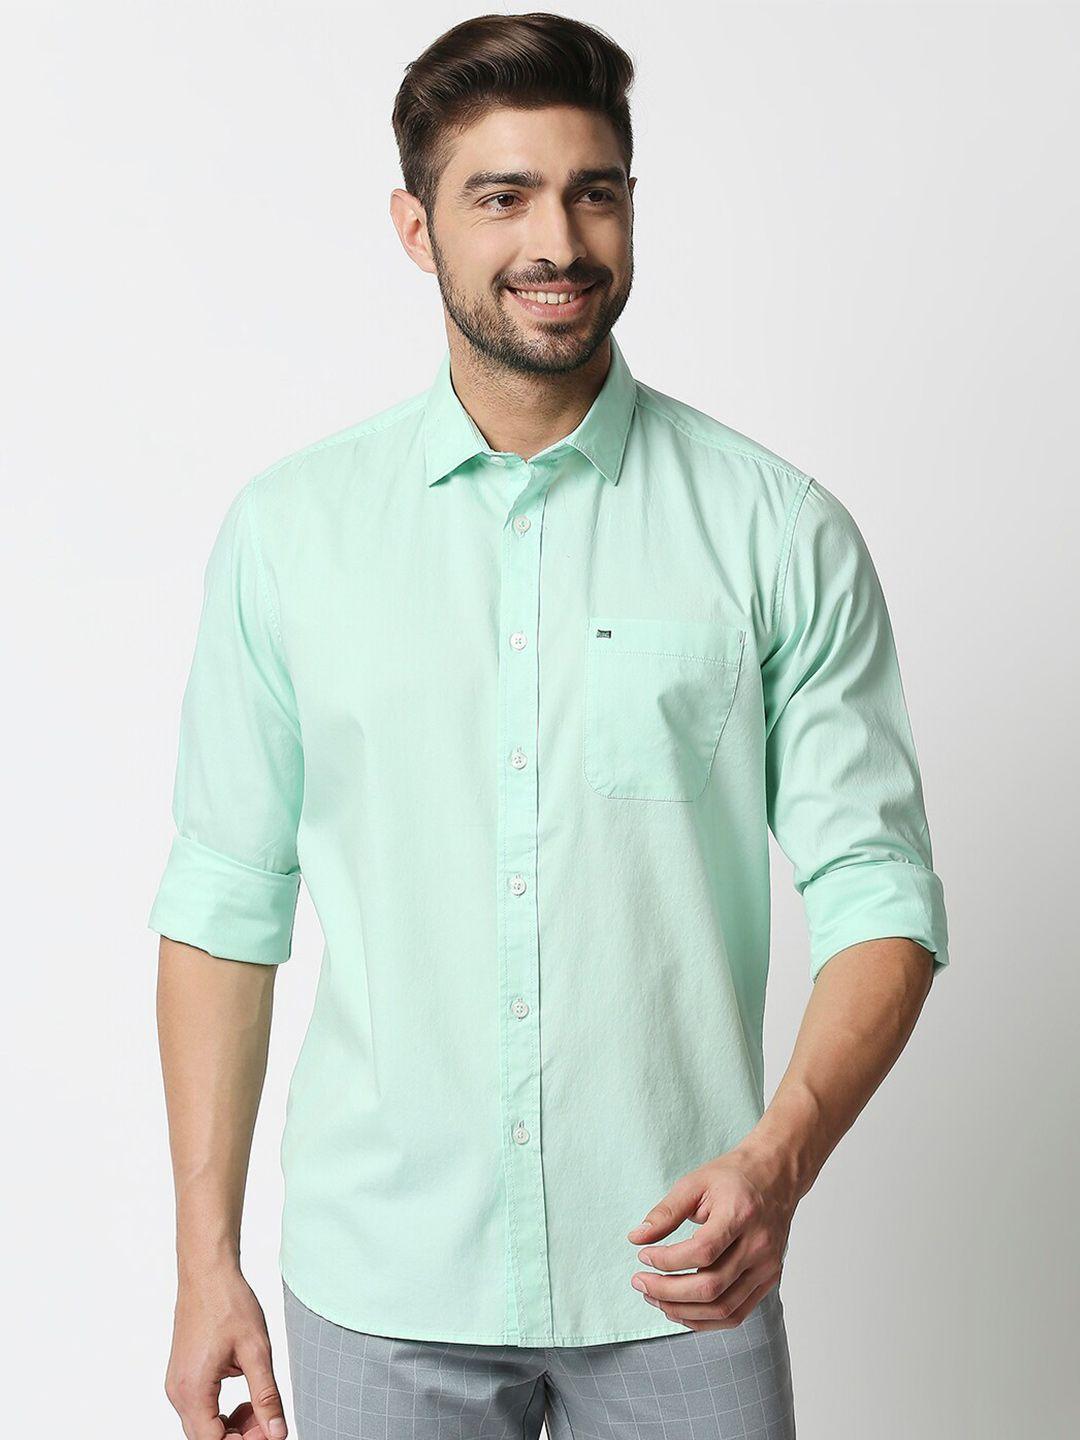 basics-men-sea-green-solid-slim-fit-cotton-casual-shirt